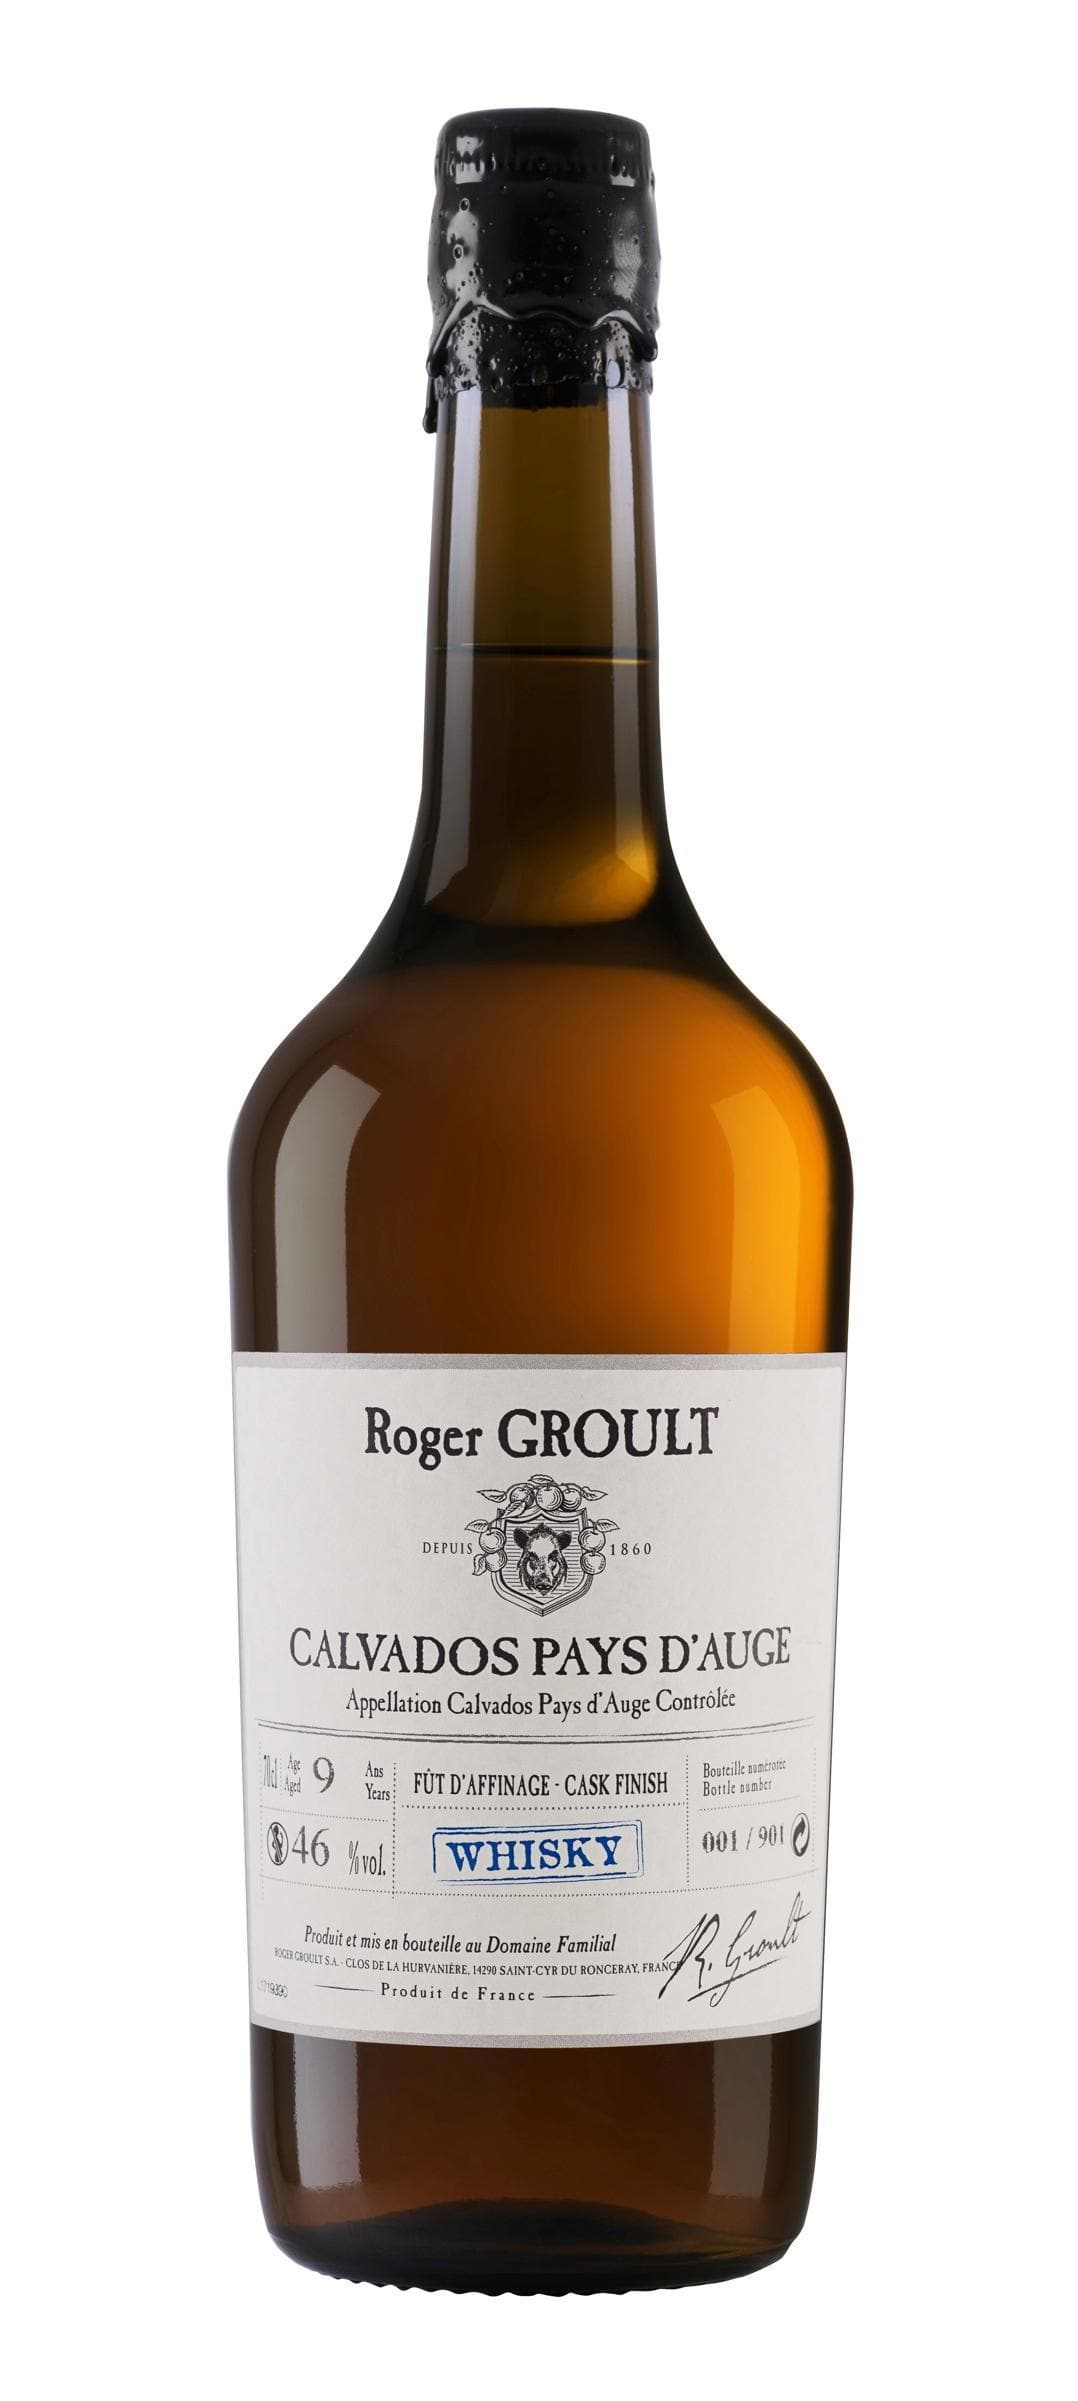 Roger Groult Whisky Cask Finish 46% 700ml | Brandy | Shop online at Spirits of France